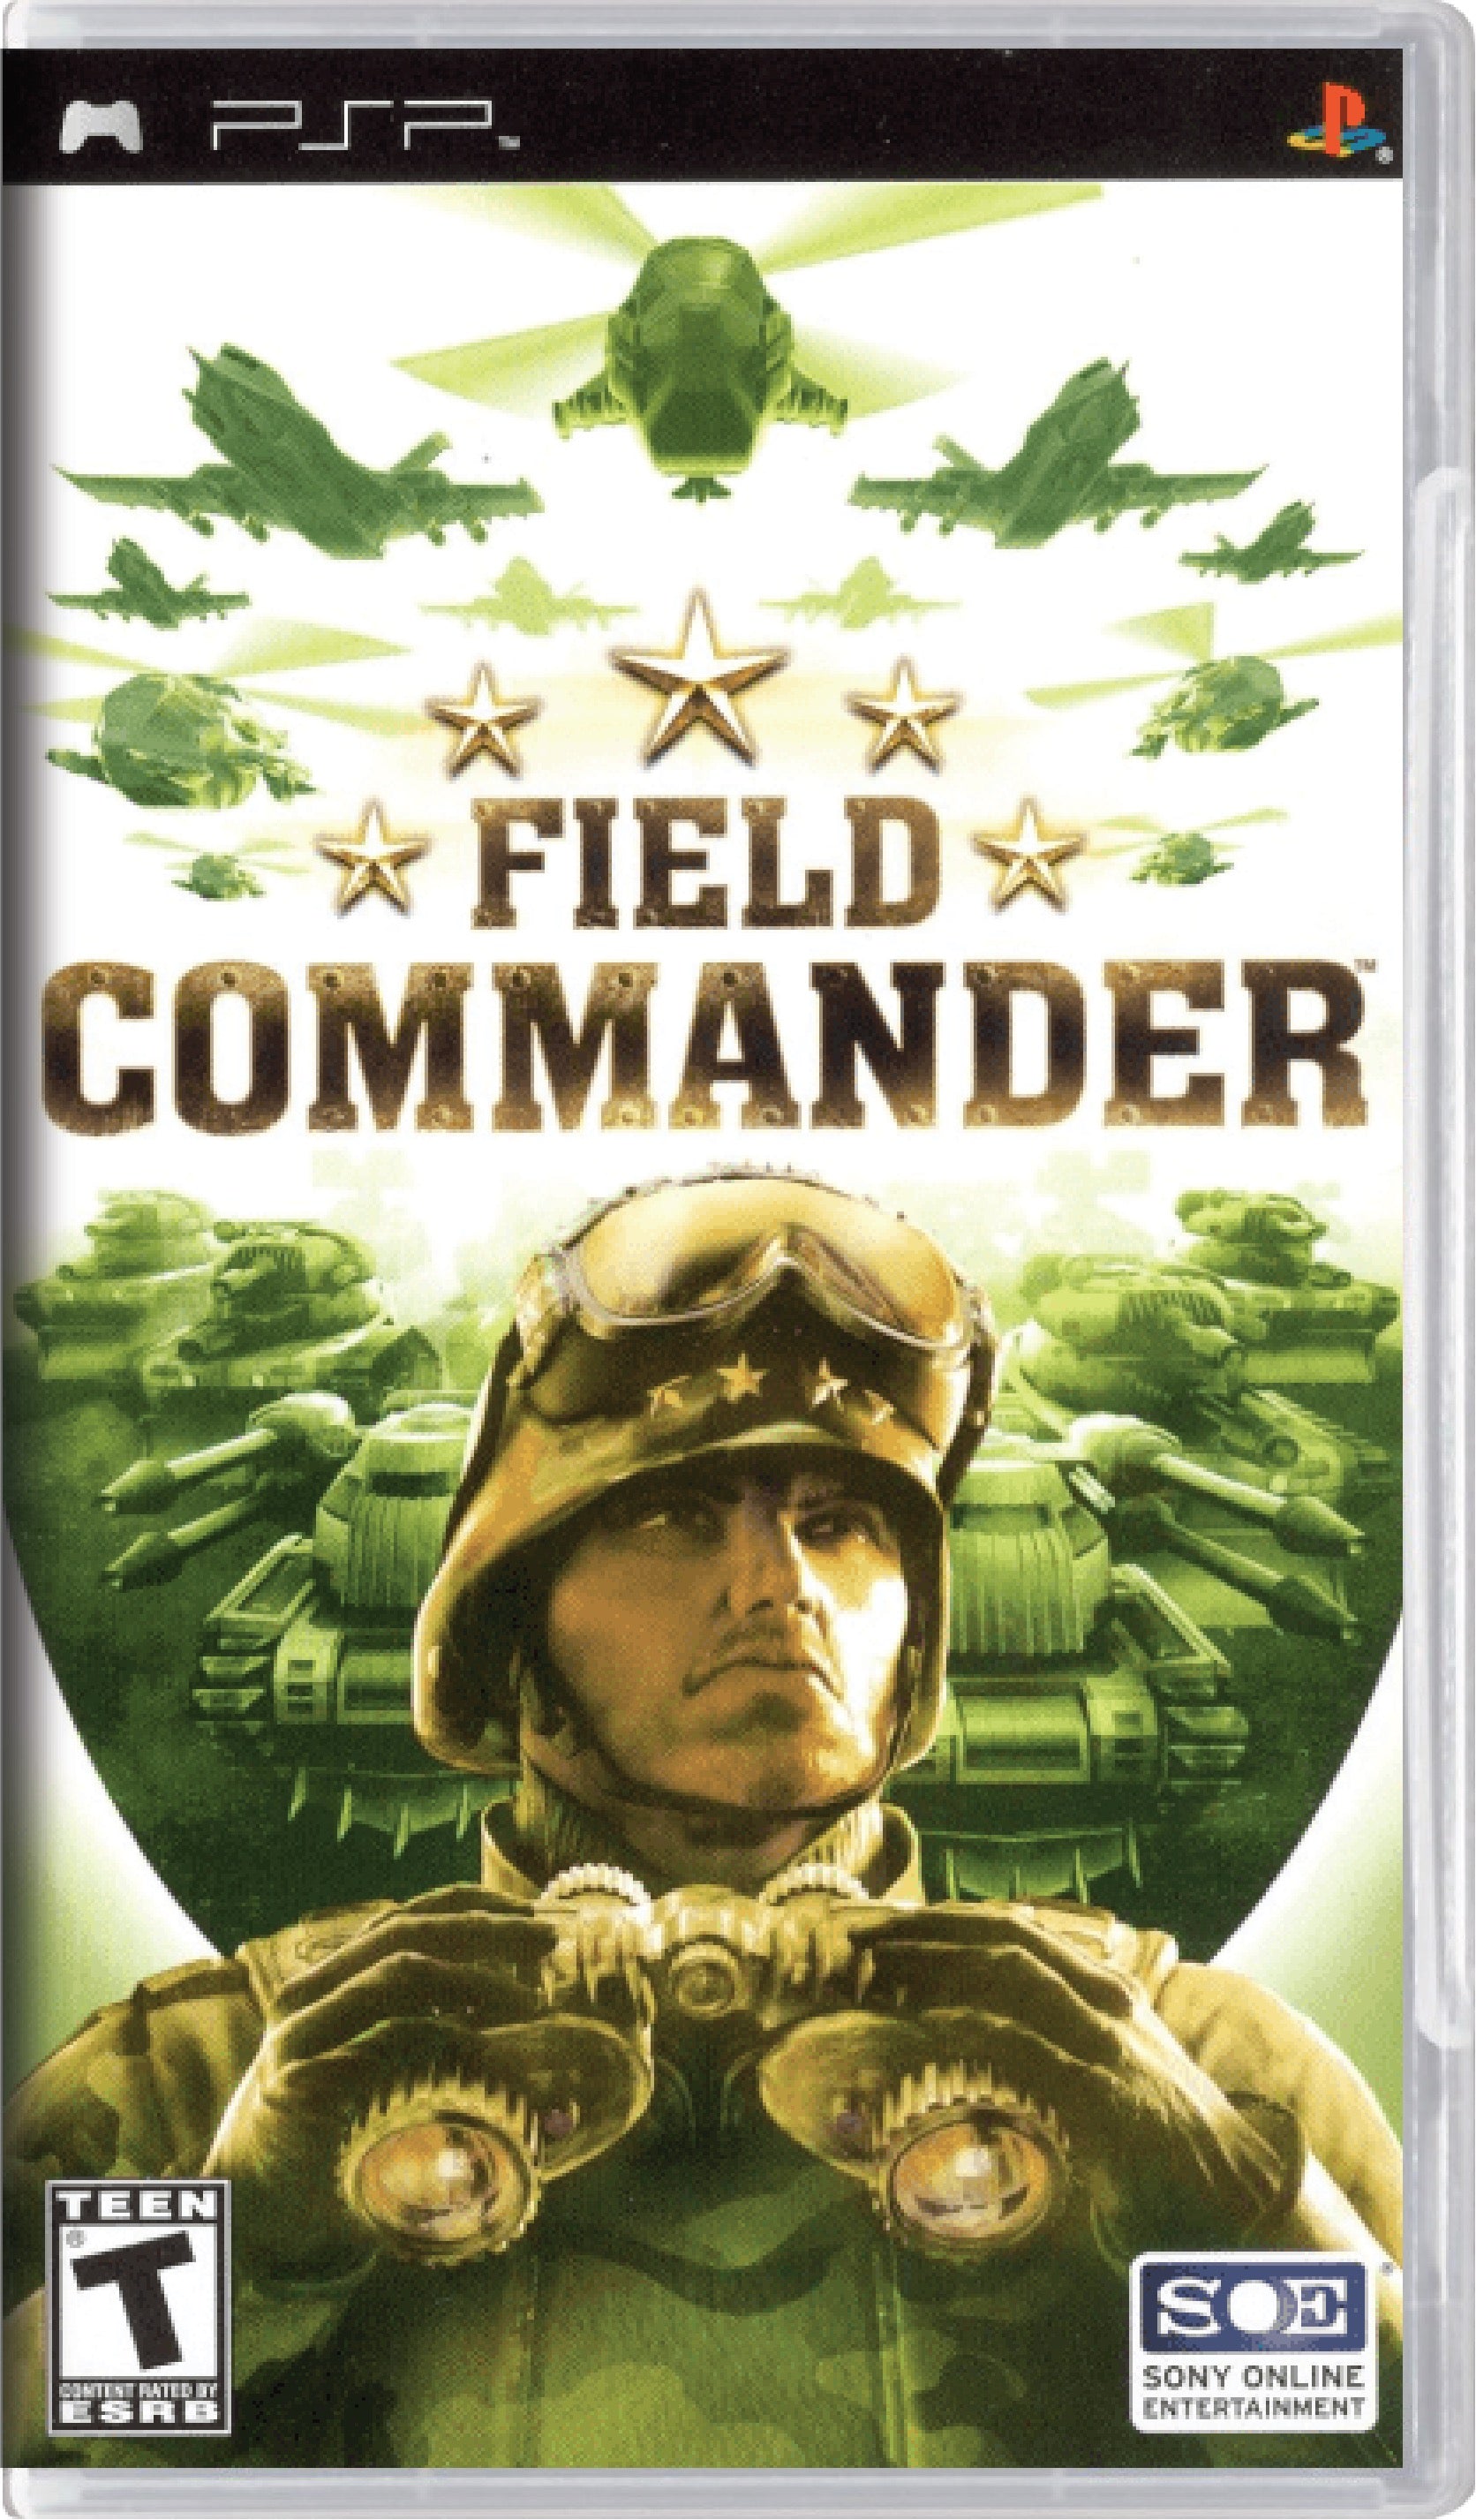 Field Commander Cover Art